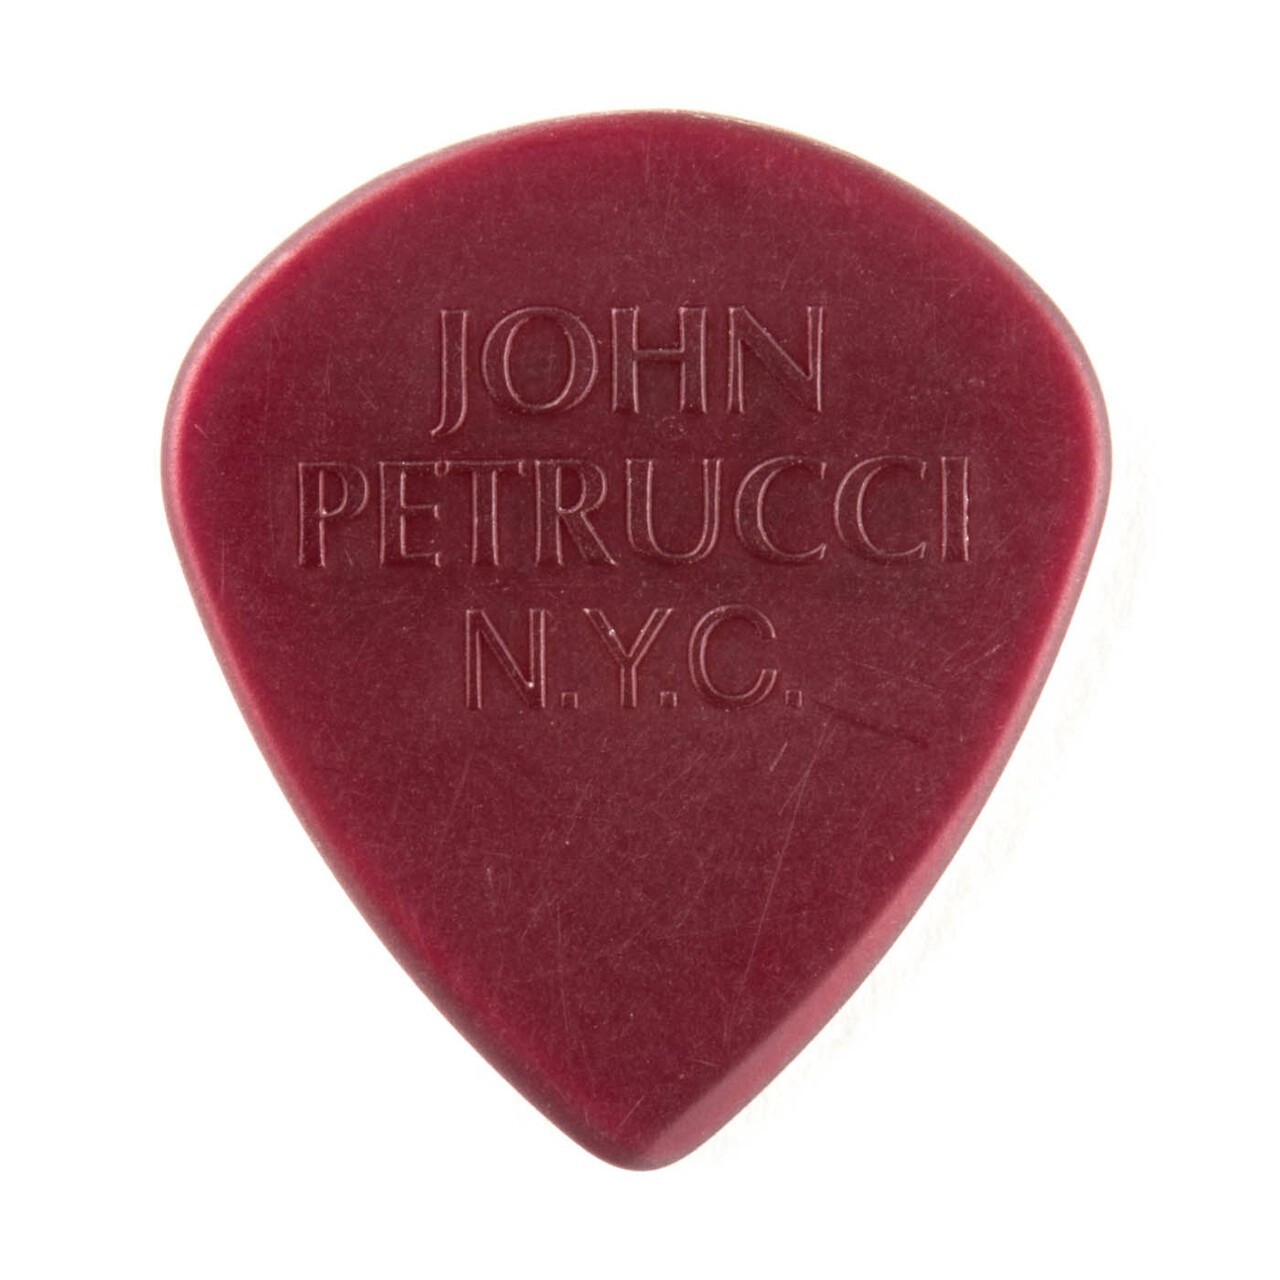 Dunlop Primetone John Petrucci Jazz III Picks, 1.38mm, Oxblood, 3 Pack